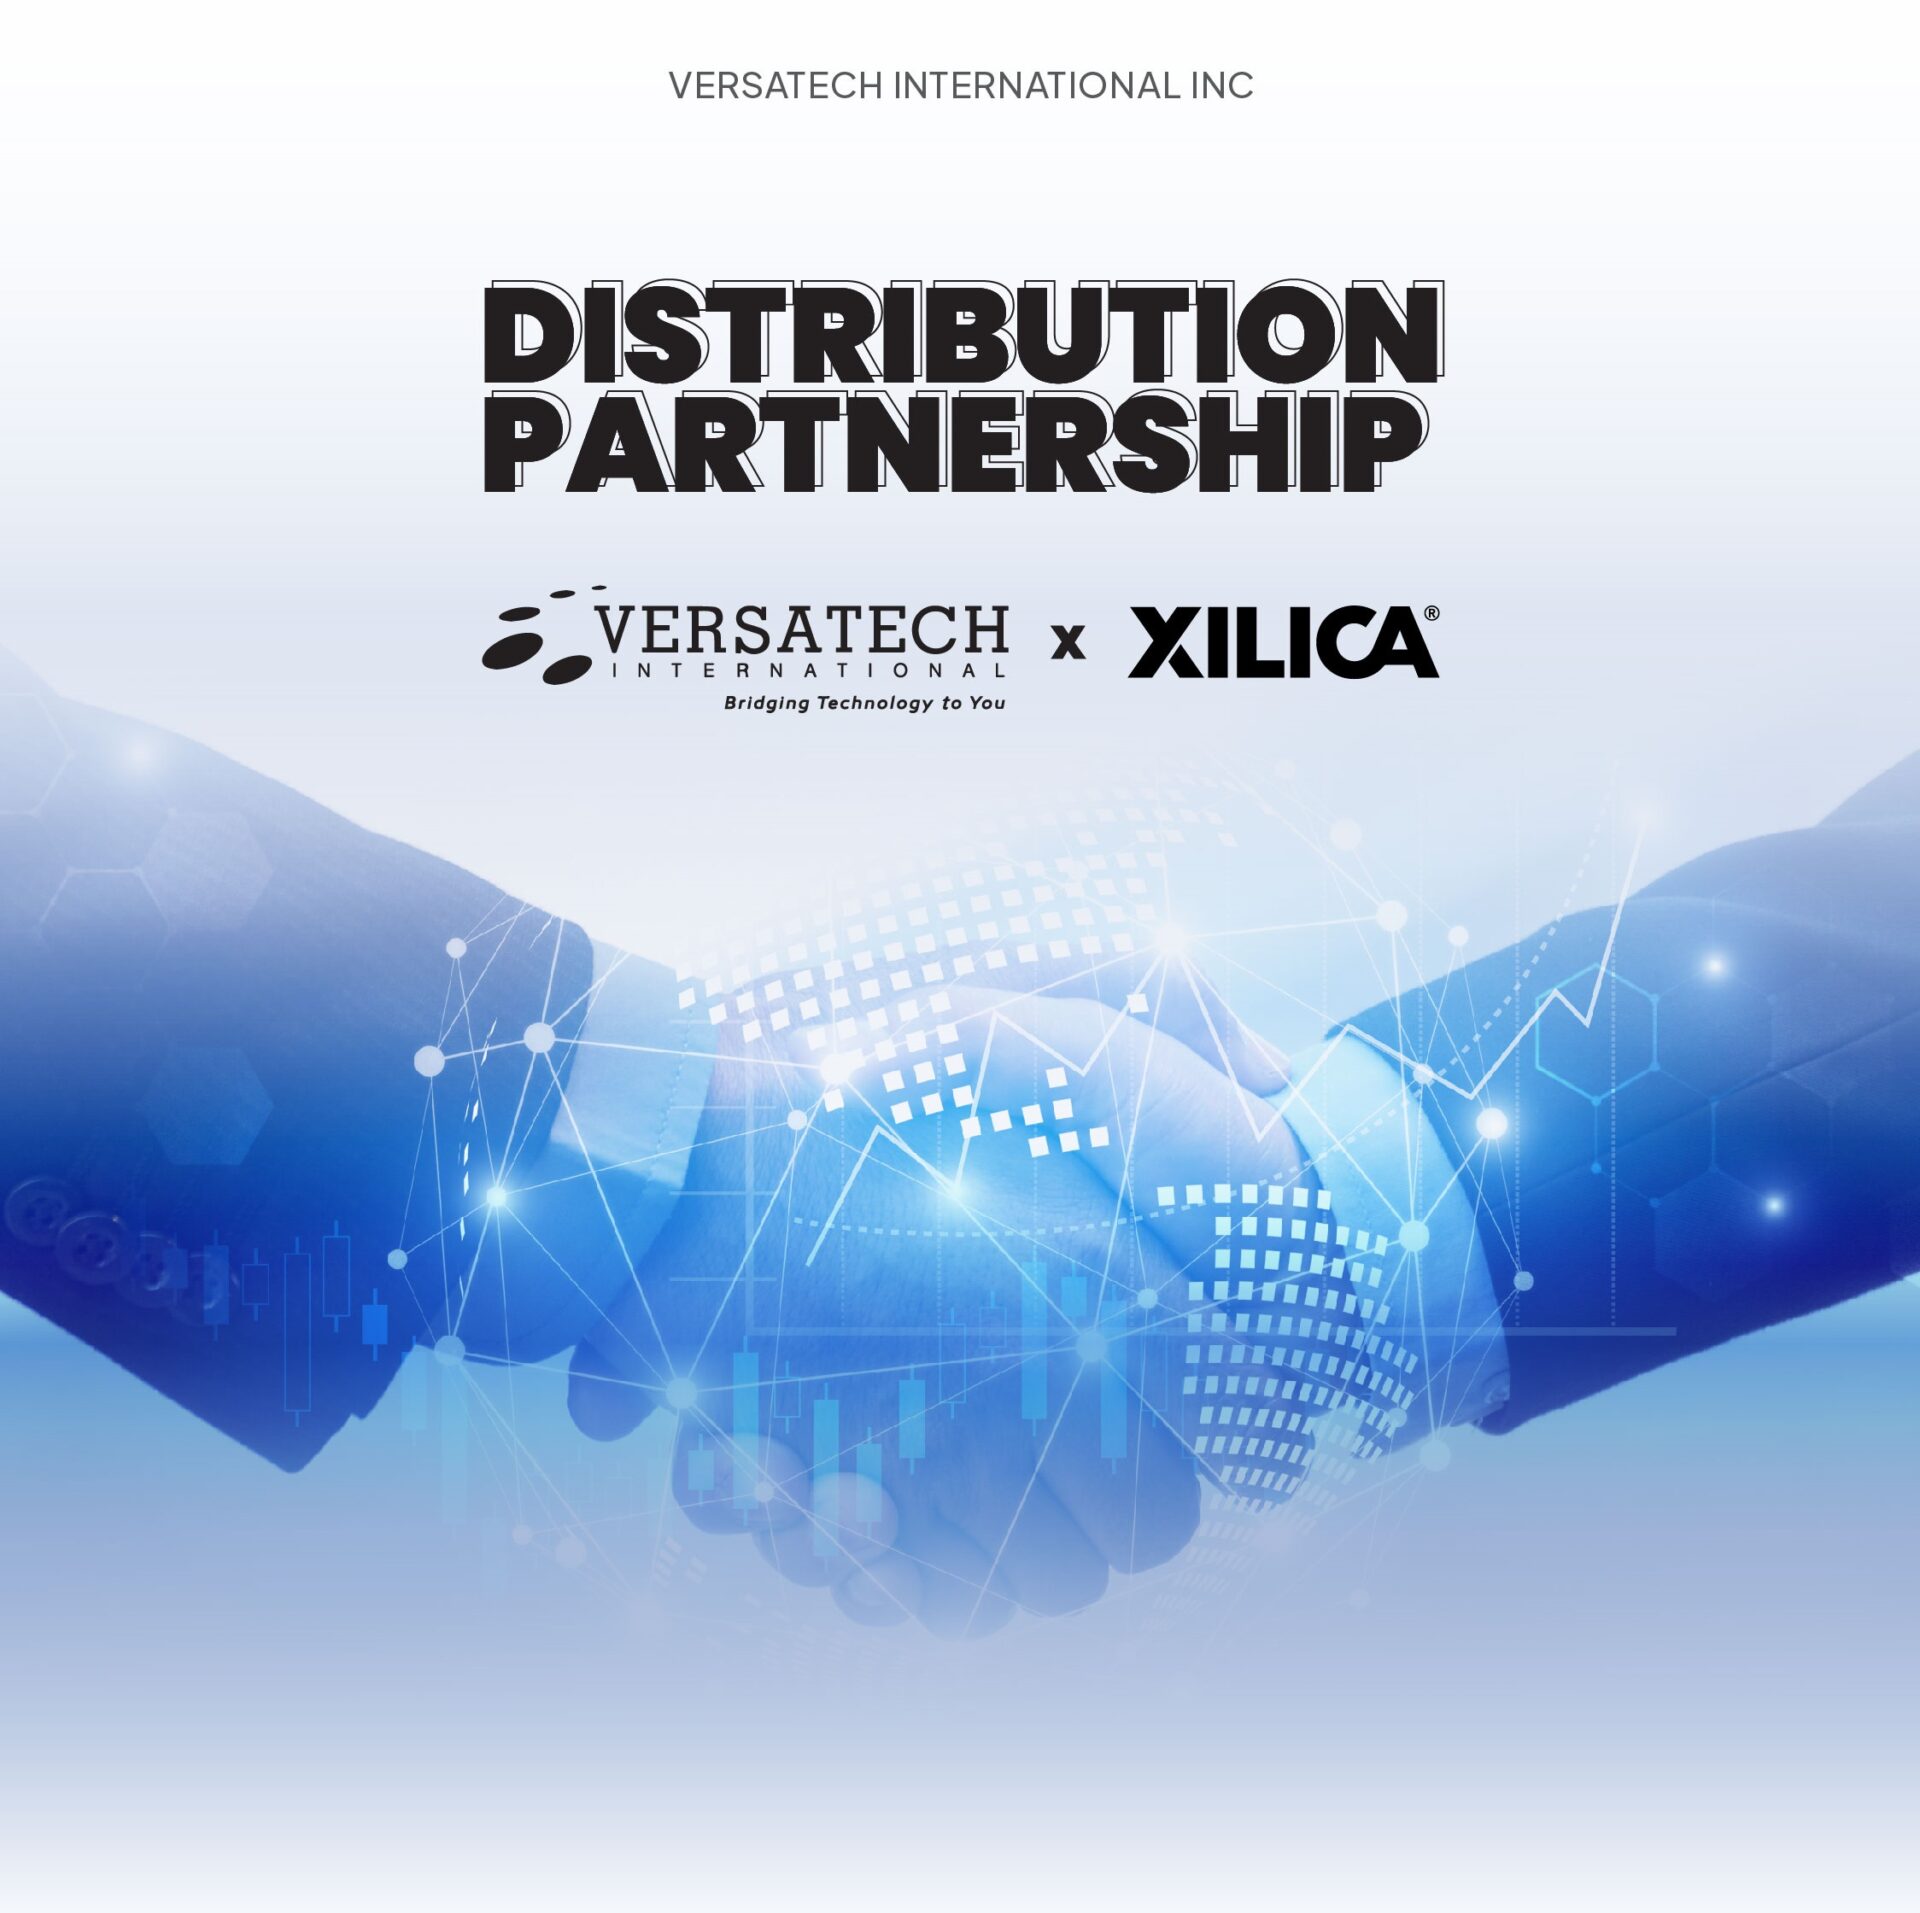 Distribution Partnership of Xilica and Versatech